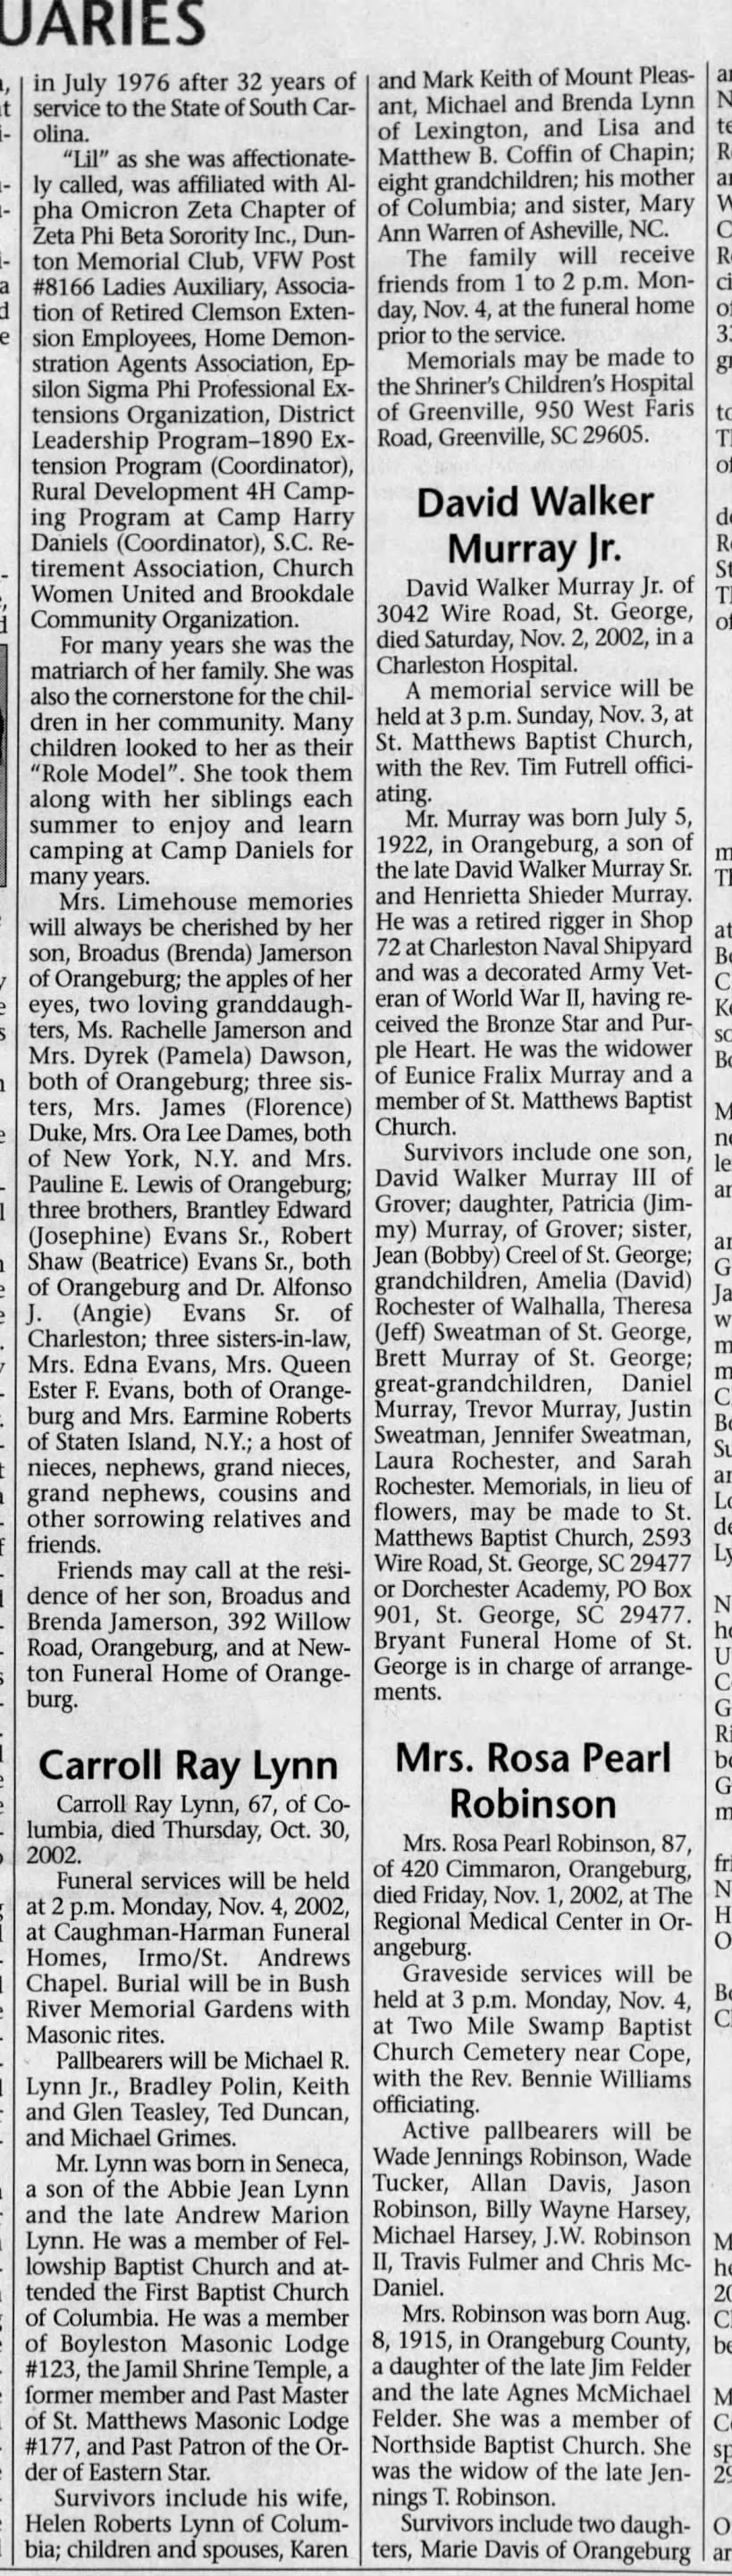 Carroll Ray Lynn Obituary from Nov 3 2002 Times and Democrat Orangeburg SC